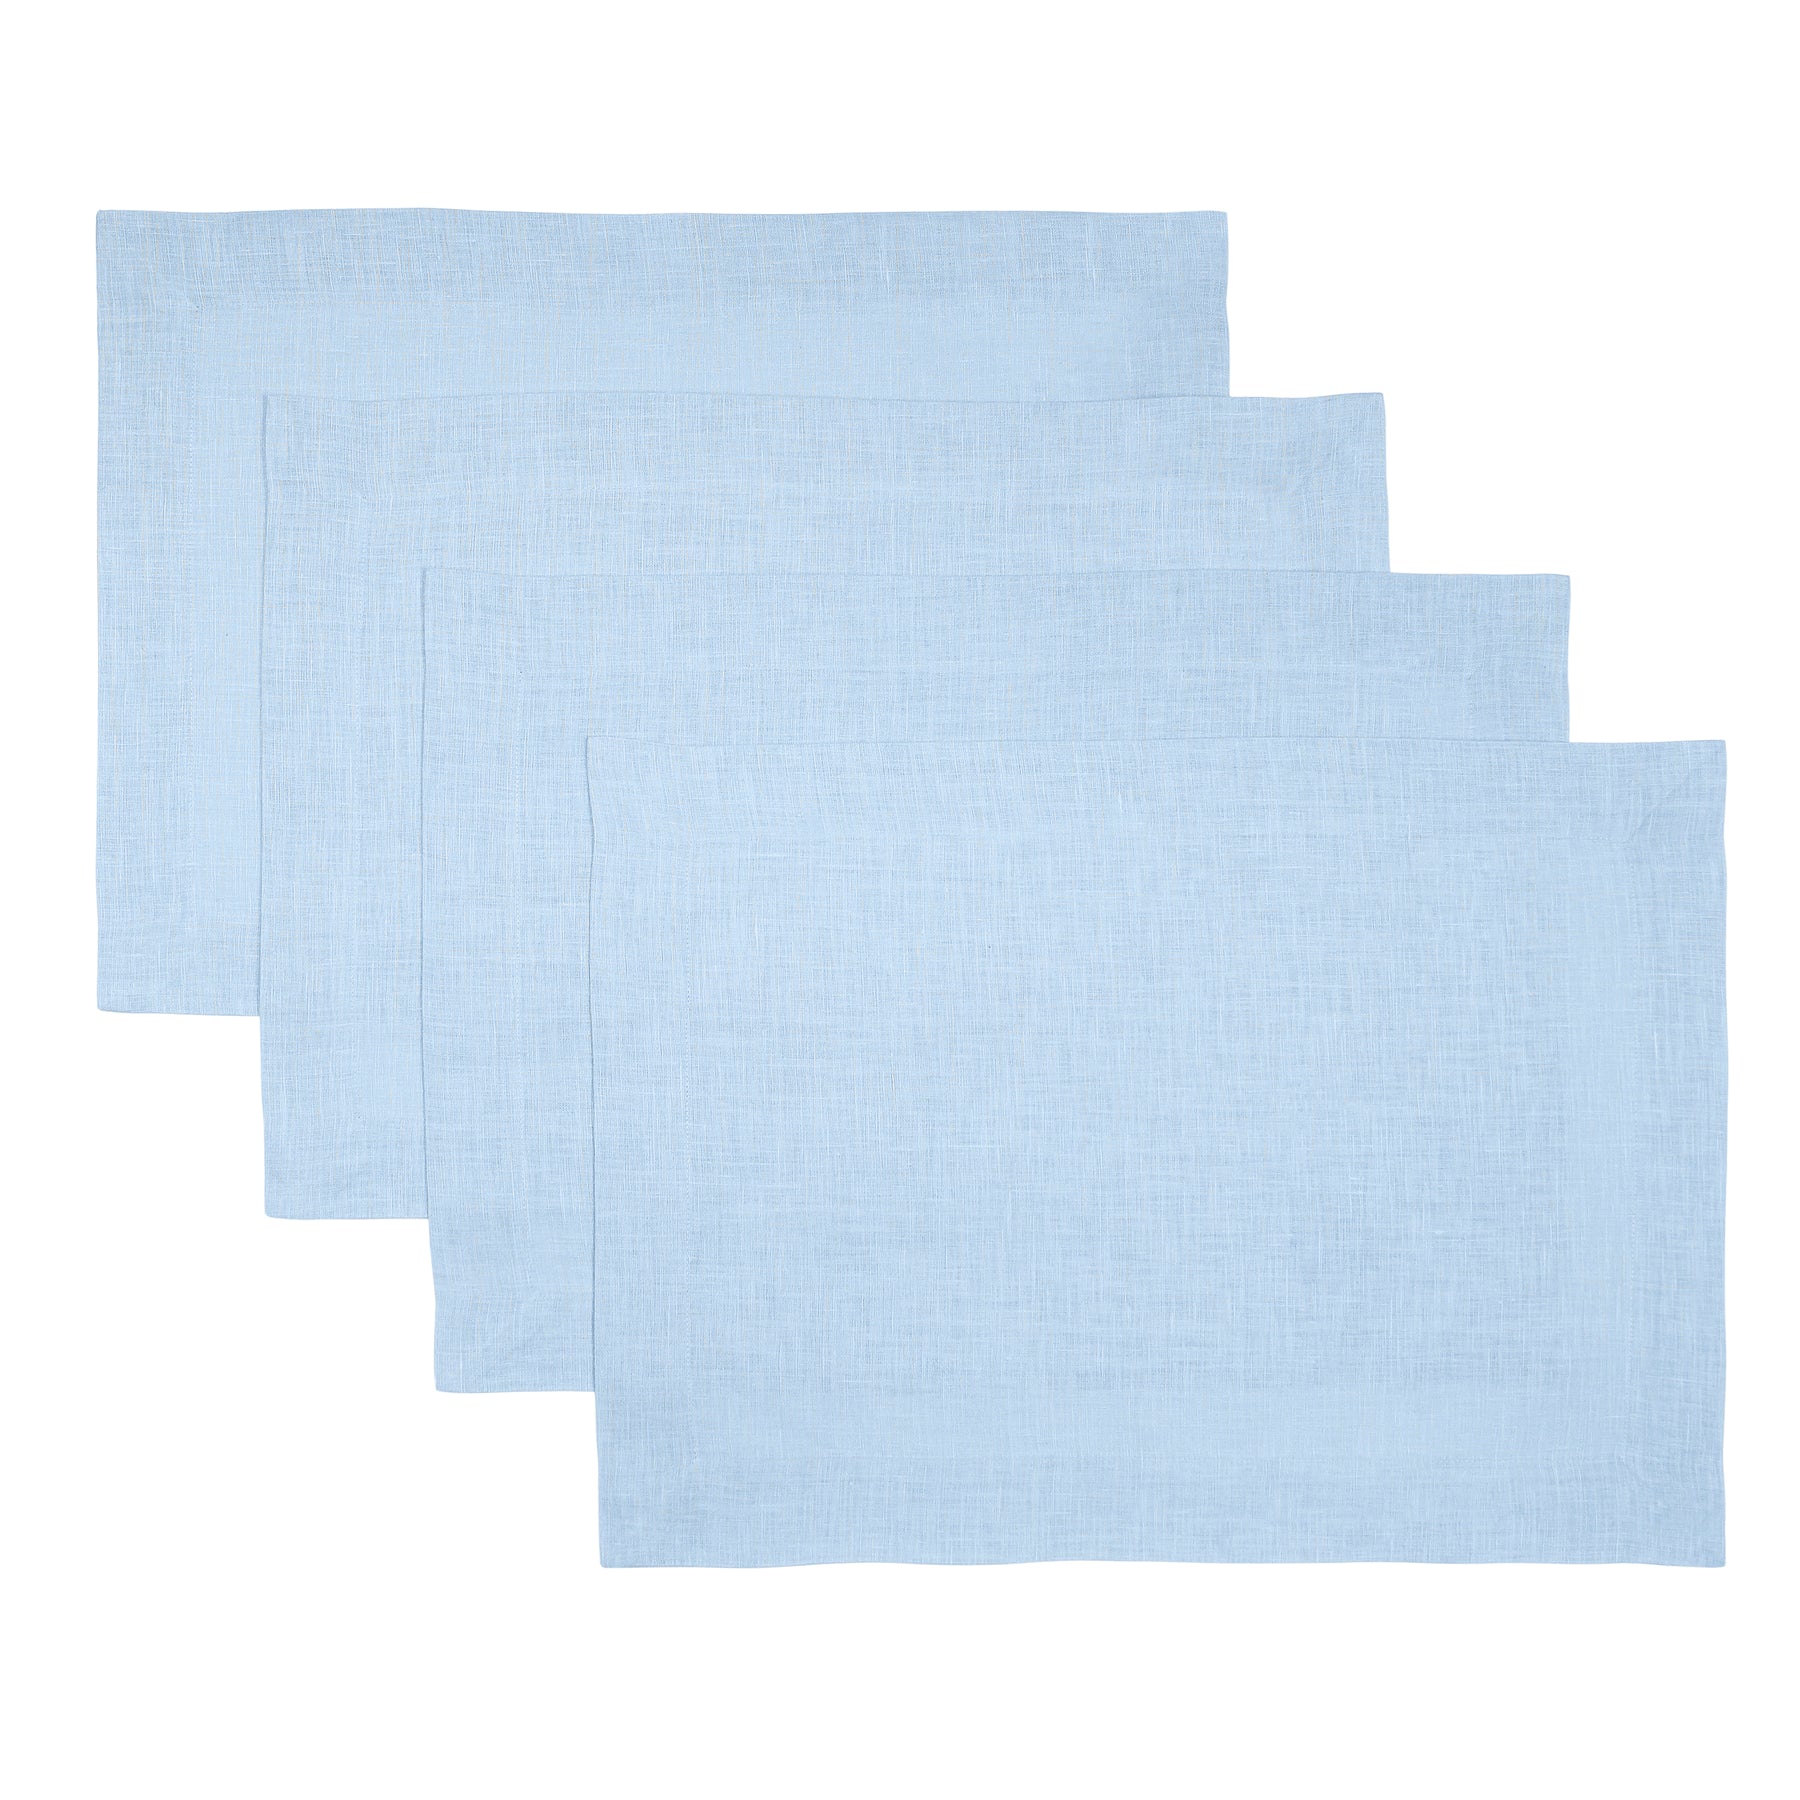 Powder Blue Linen Placemats 14 x 19 Inch Set of 4 - Hemmed